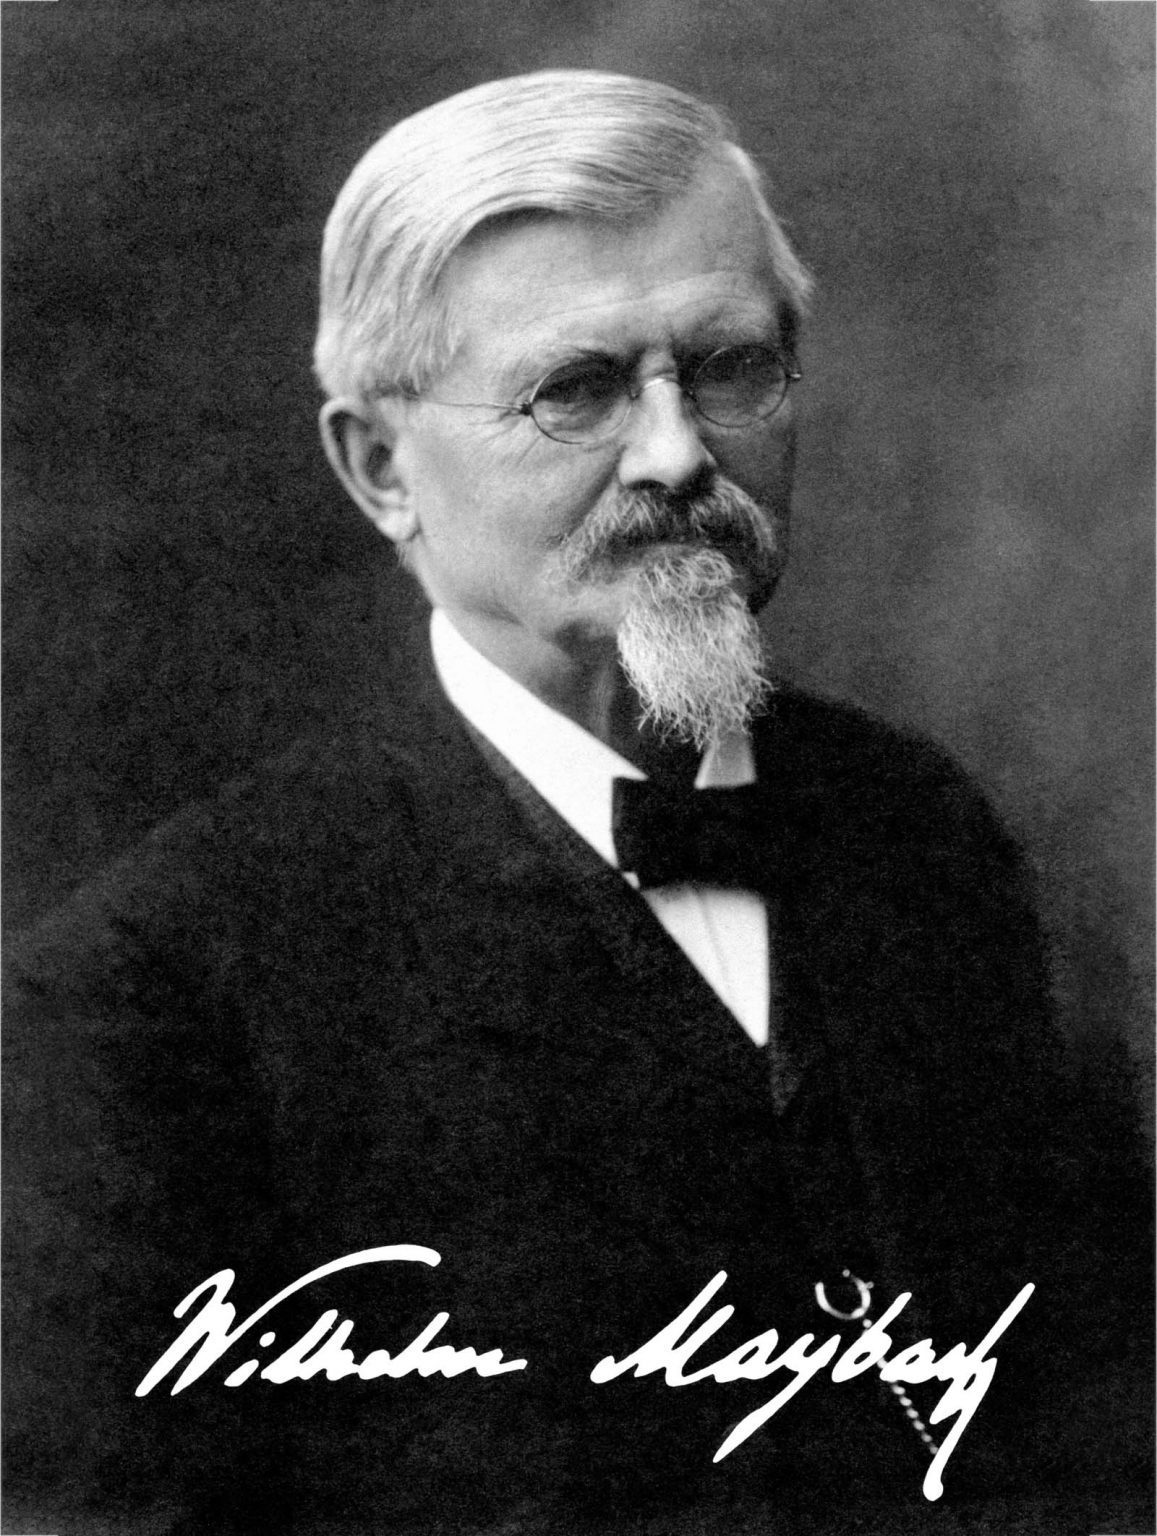 Wilhelm Maybach signed portrait photograph